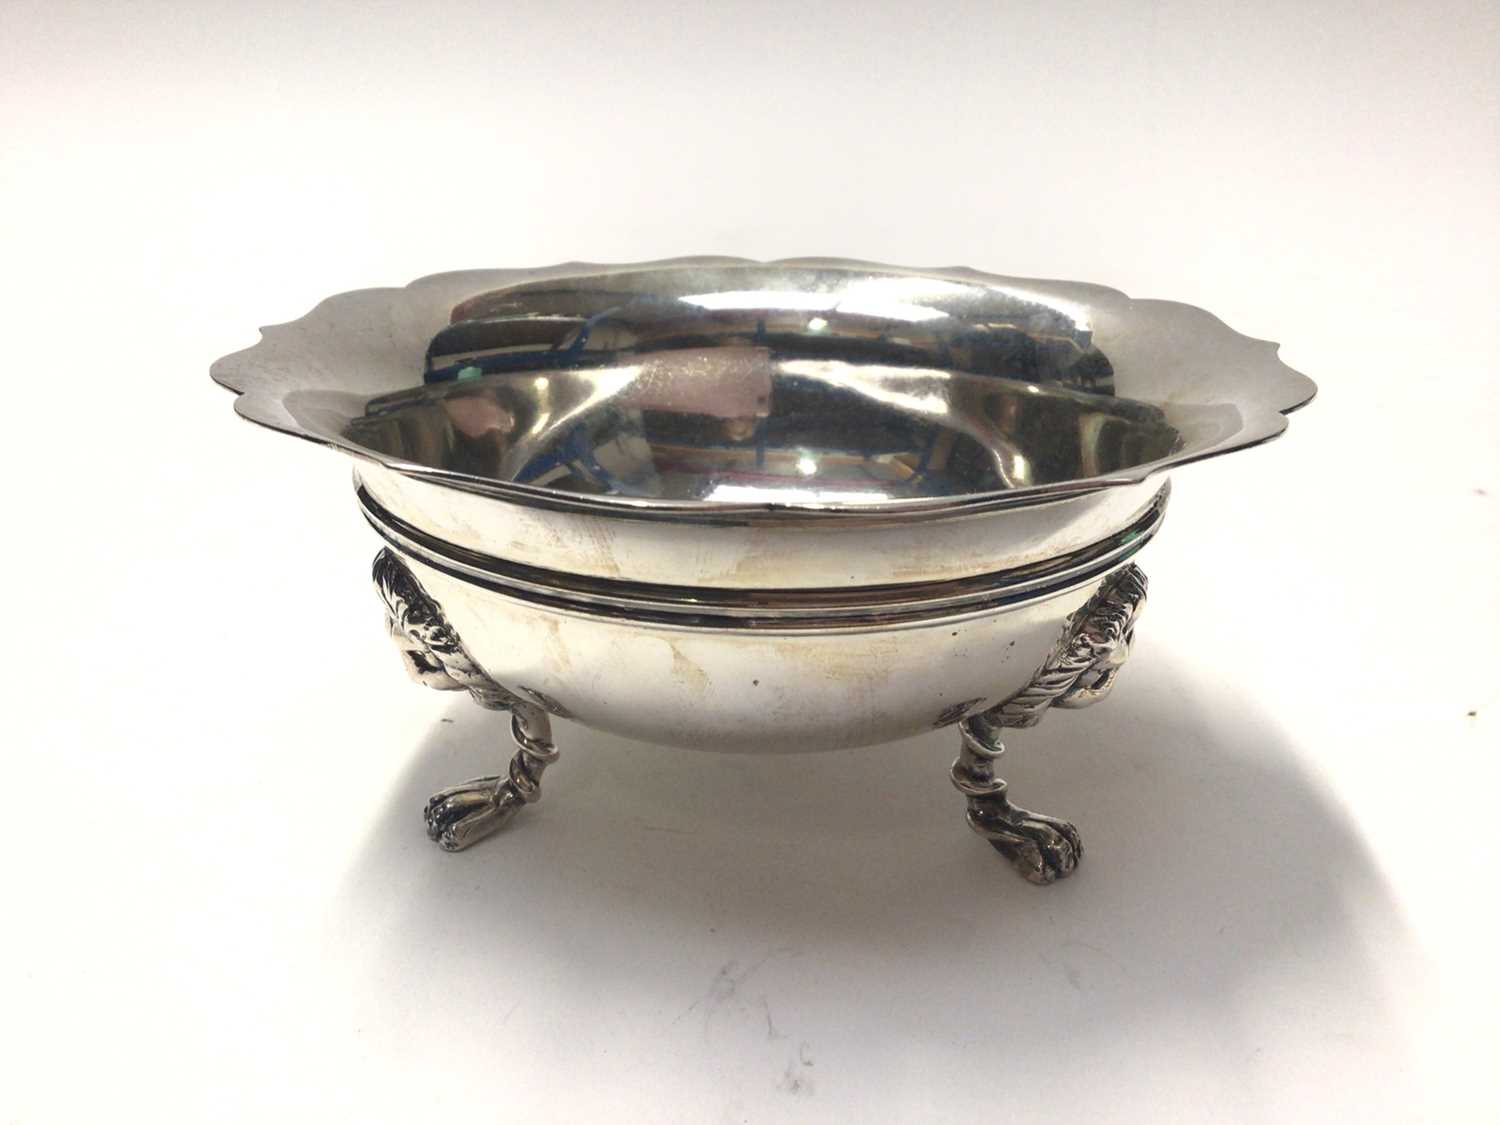 Lot 256 - Edwardian silver sugar bowl, raised on three feet, (London 1903), maker Frederick William Hentsch, 13.5cm in diameter, all at 8.2oz